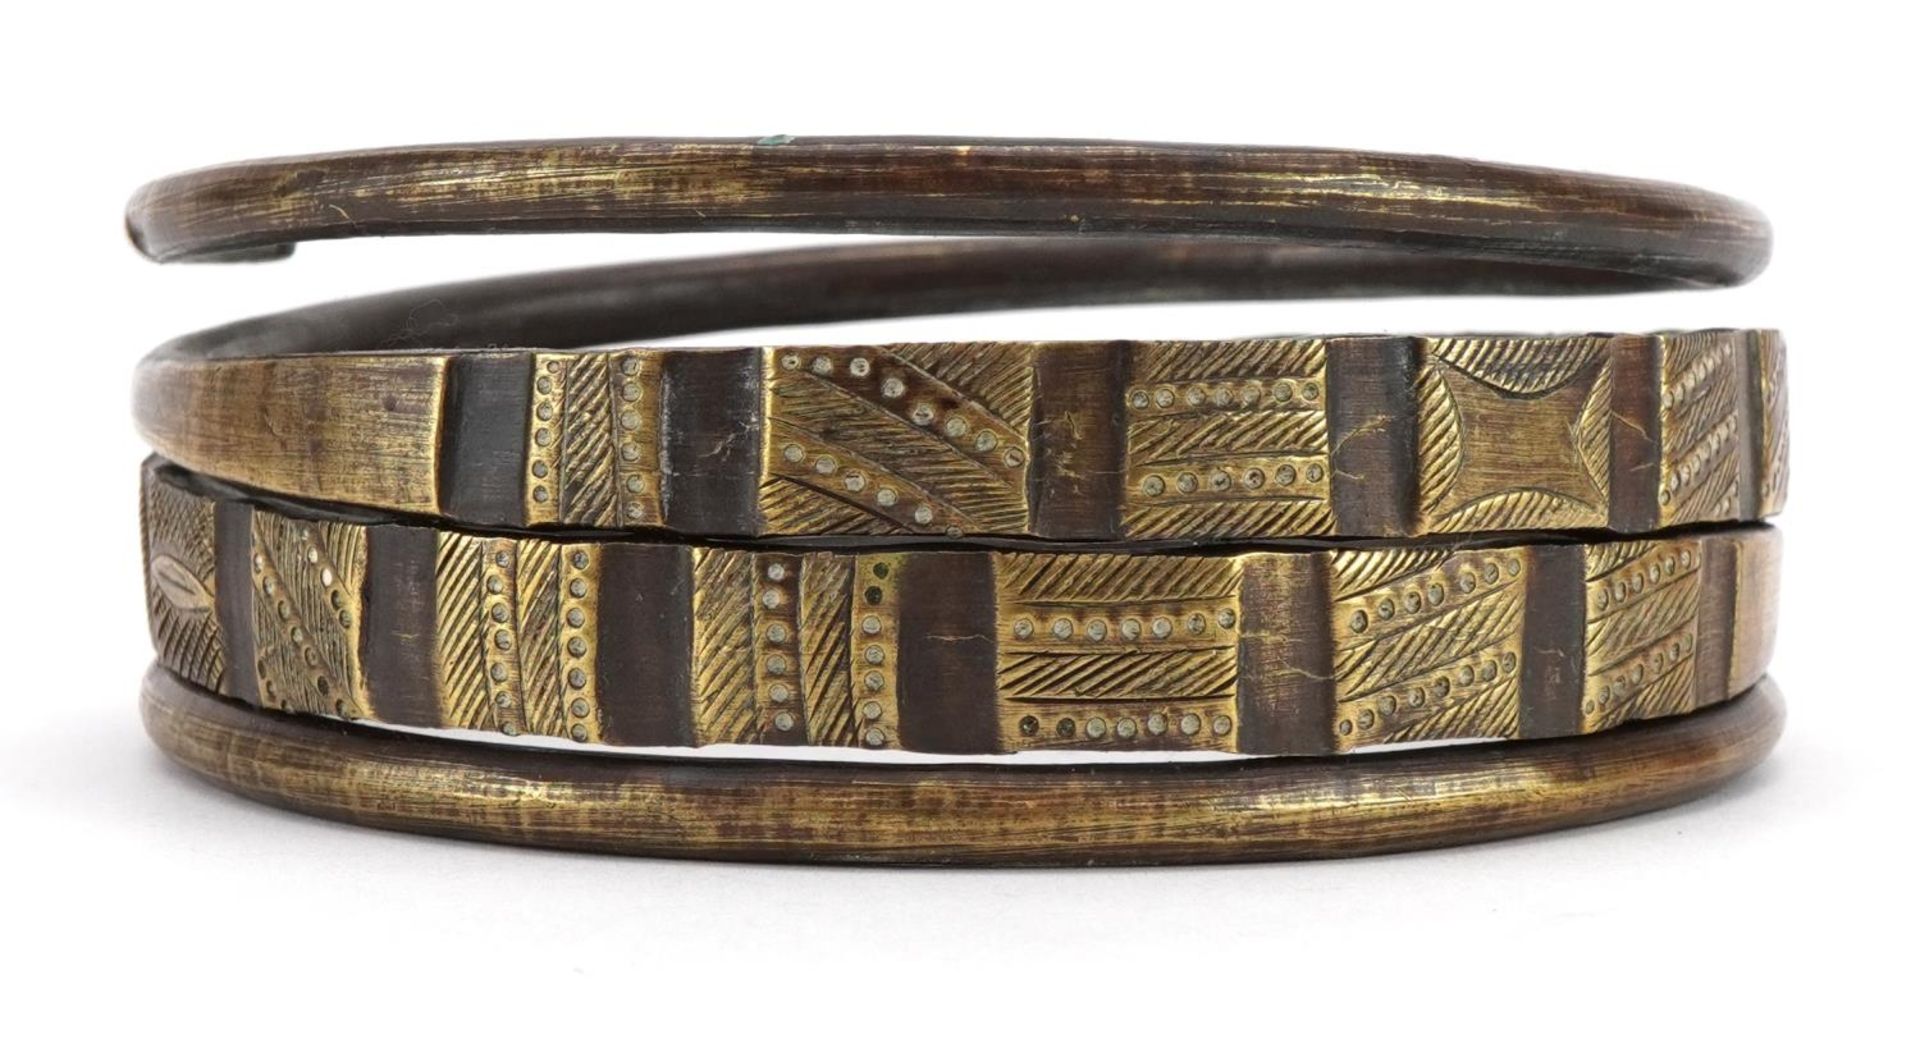 African tribal interest bronze coiled arm bracelet, possibly Ethiopian, 11cm in diameter